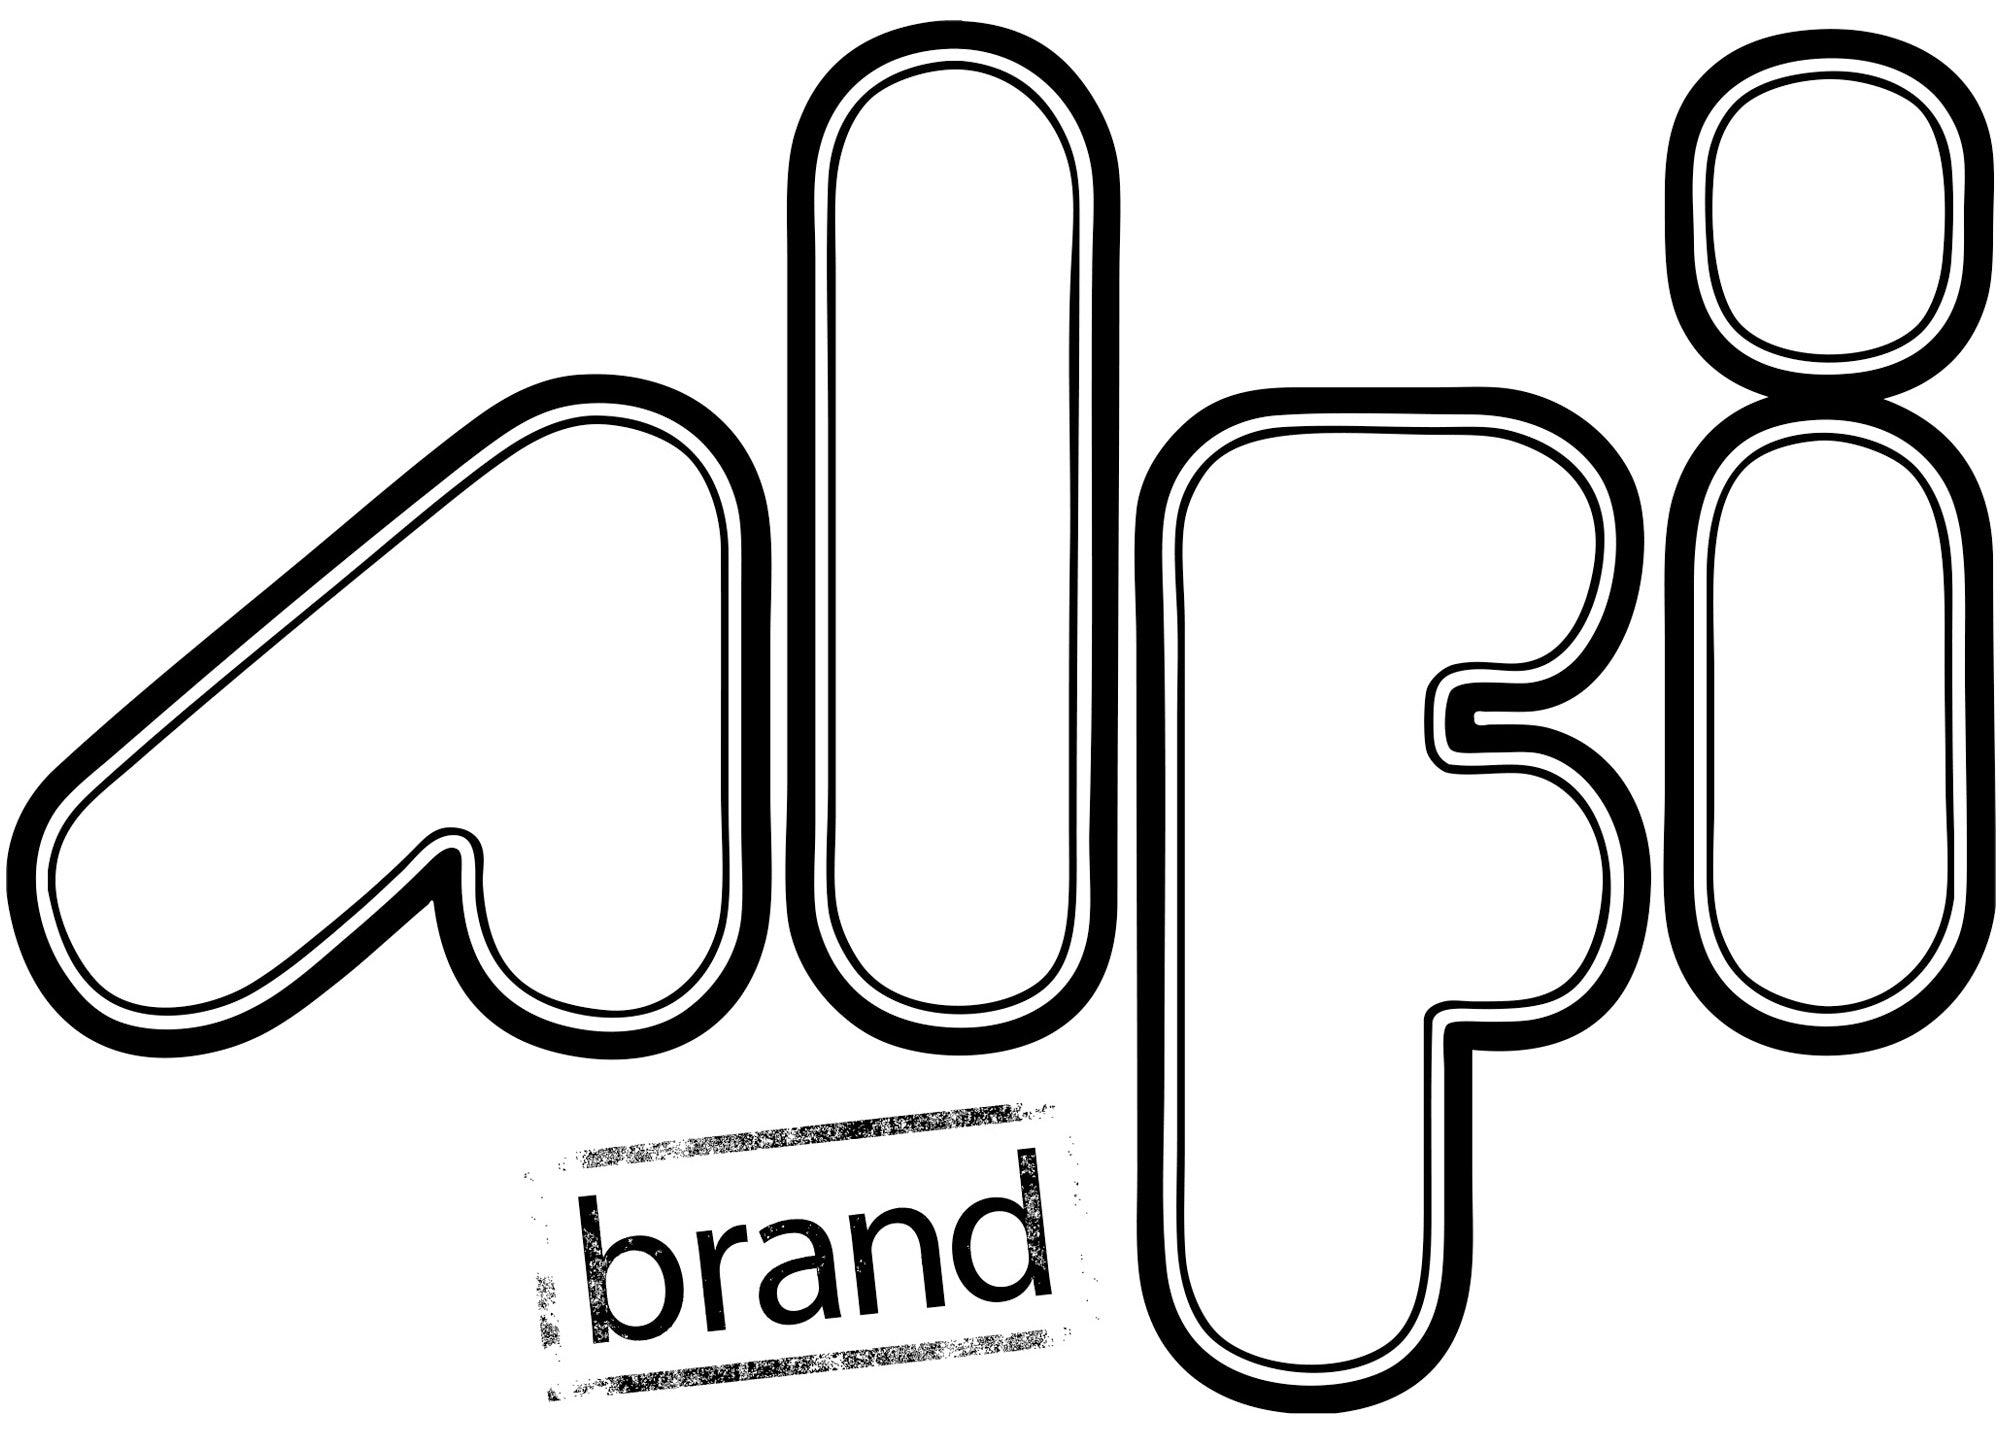 ALFI Brand - Black Matte 14" Square Solid Surface Resin Sink | ABRS14SBM